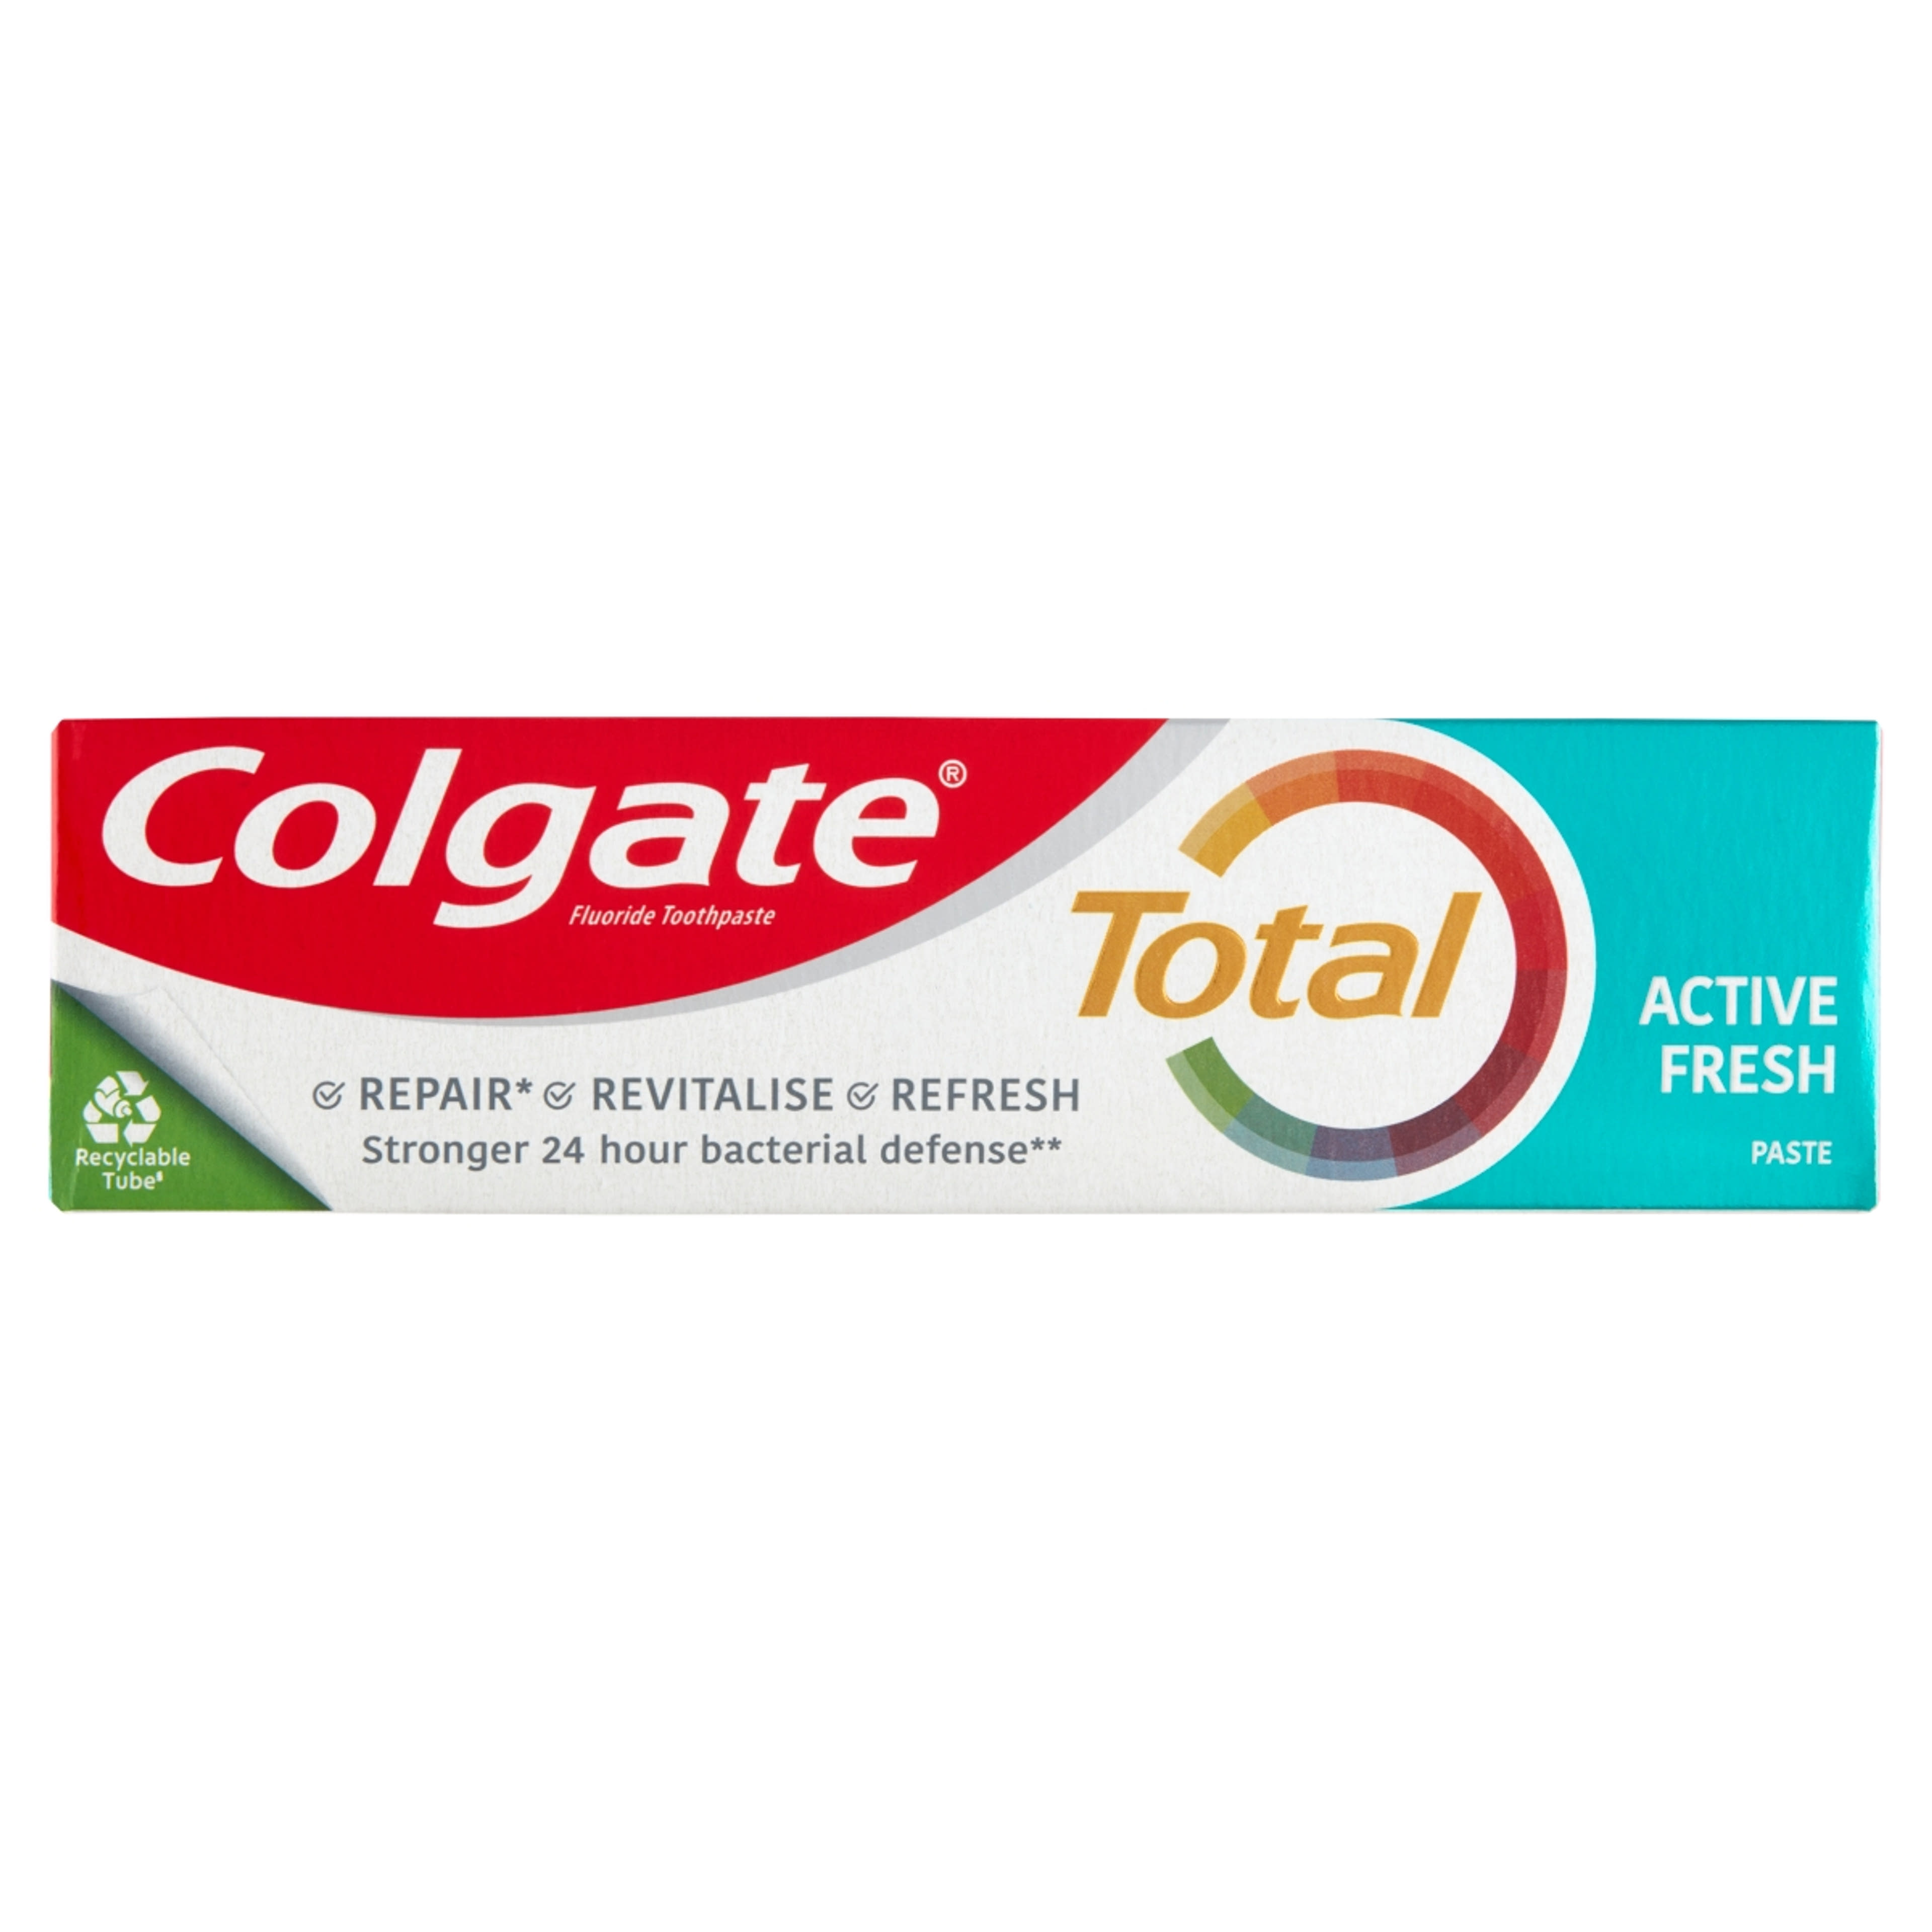 Colgate Active Fresh fogkrém - 75 ml